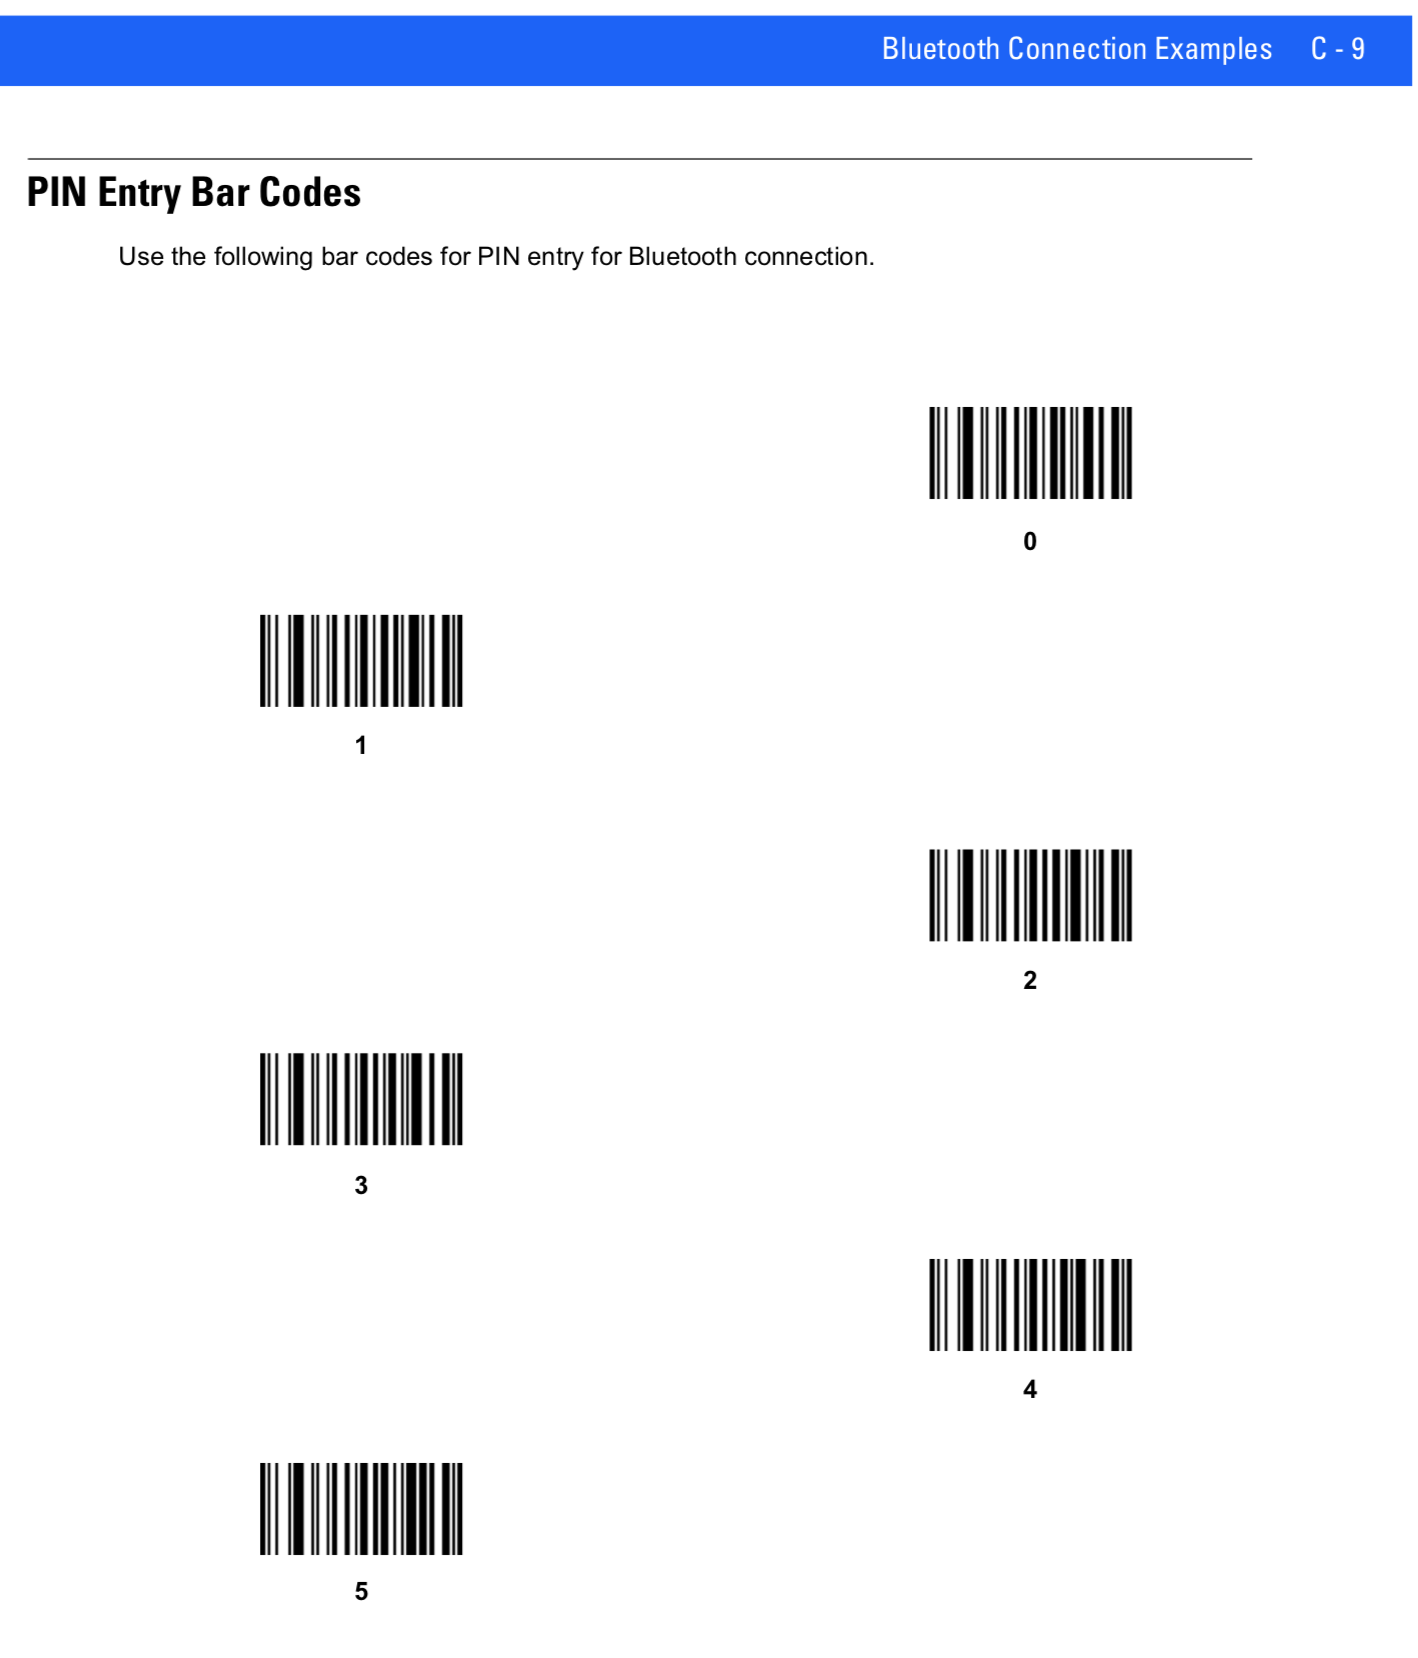 scan barcode online